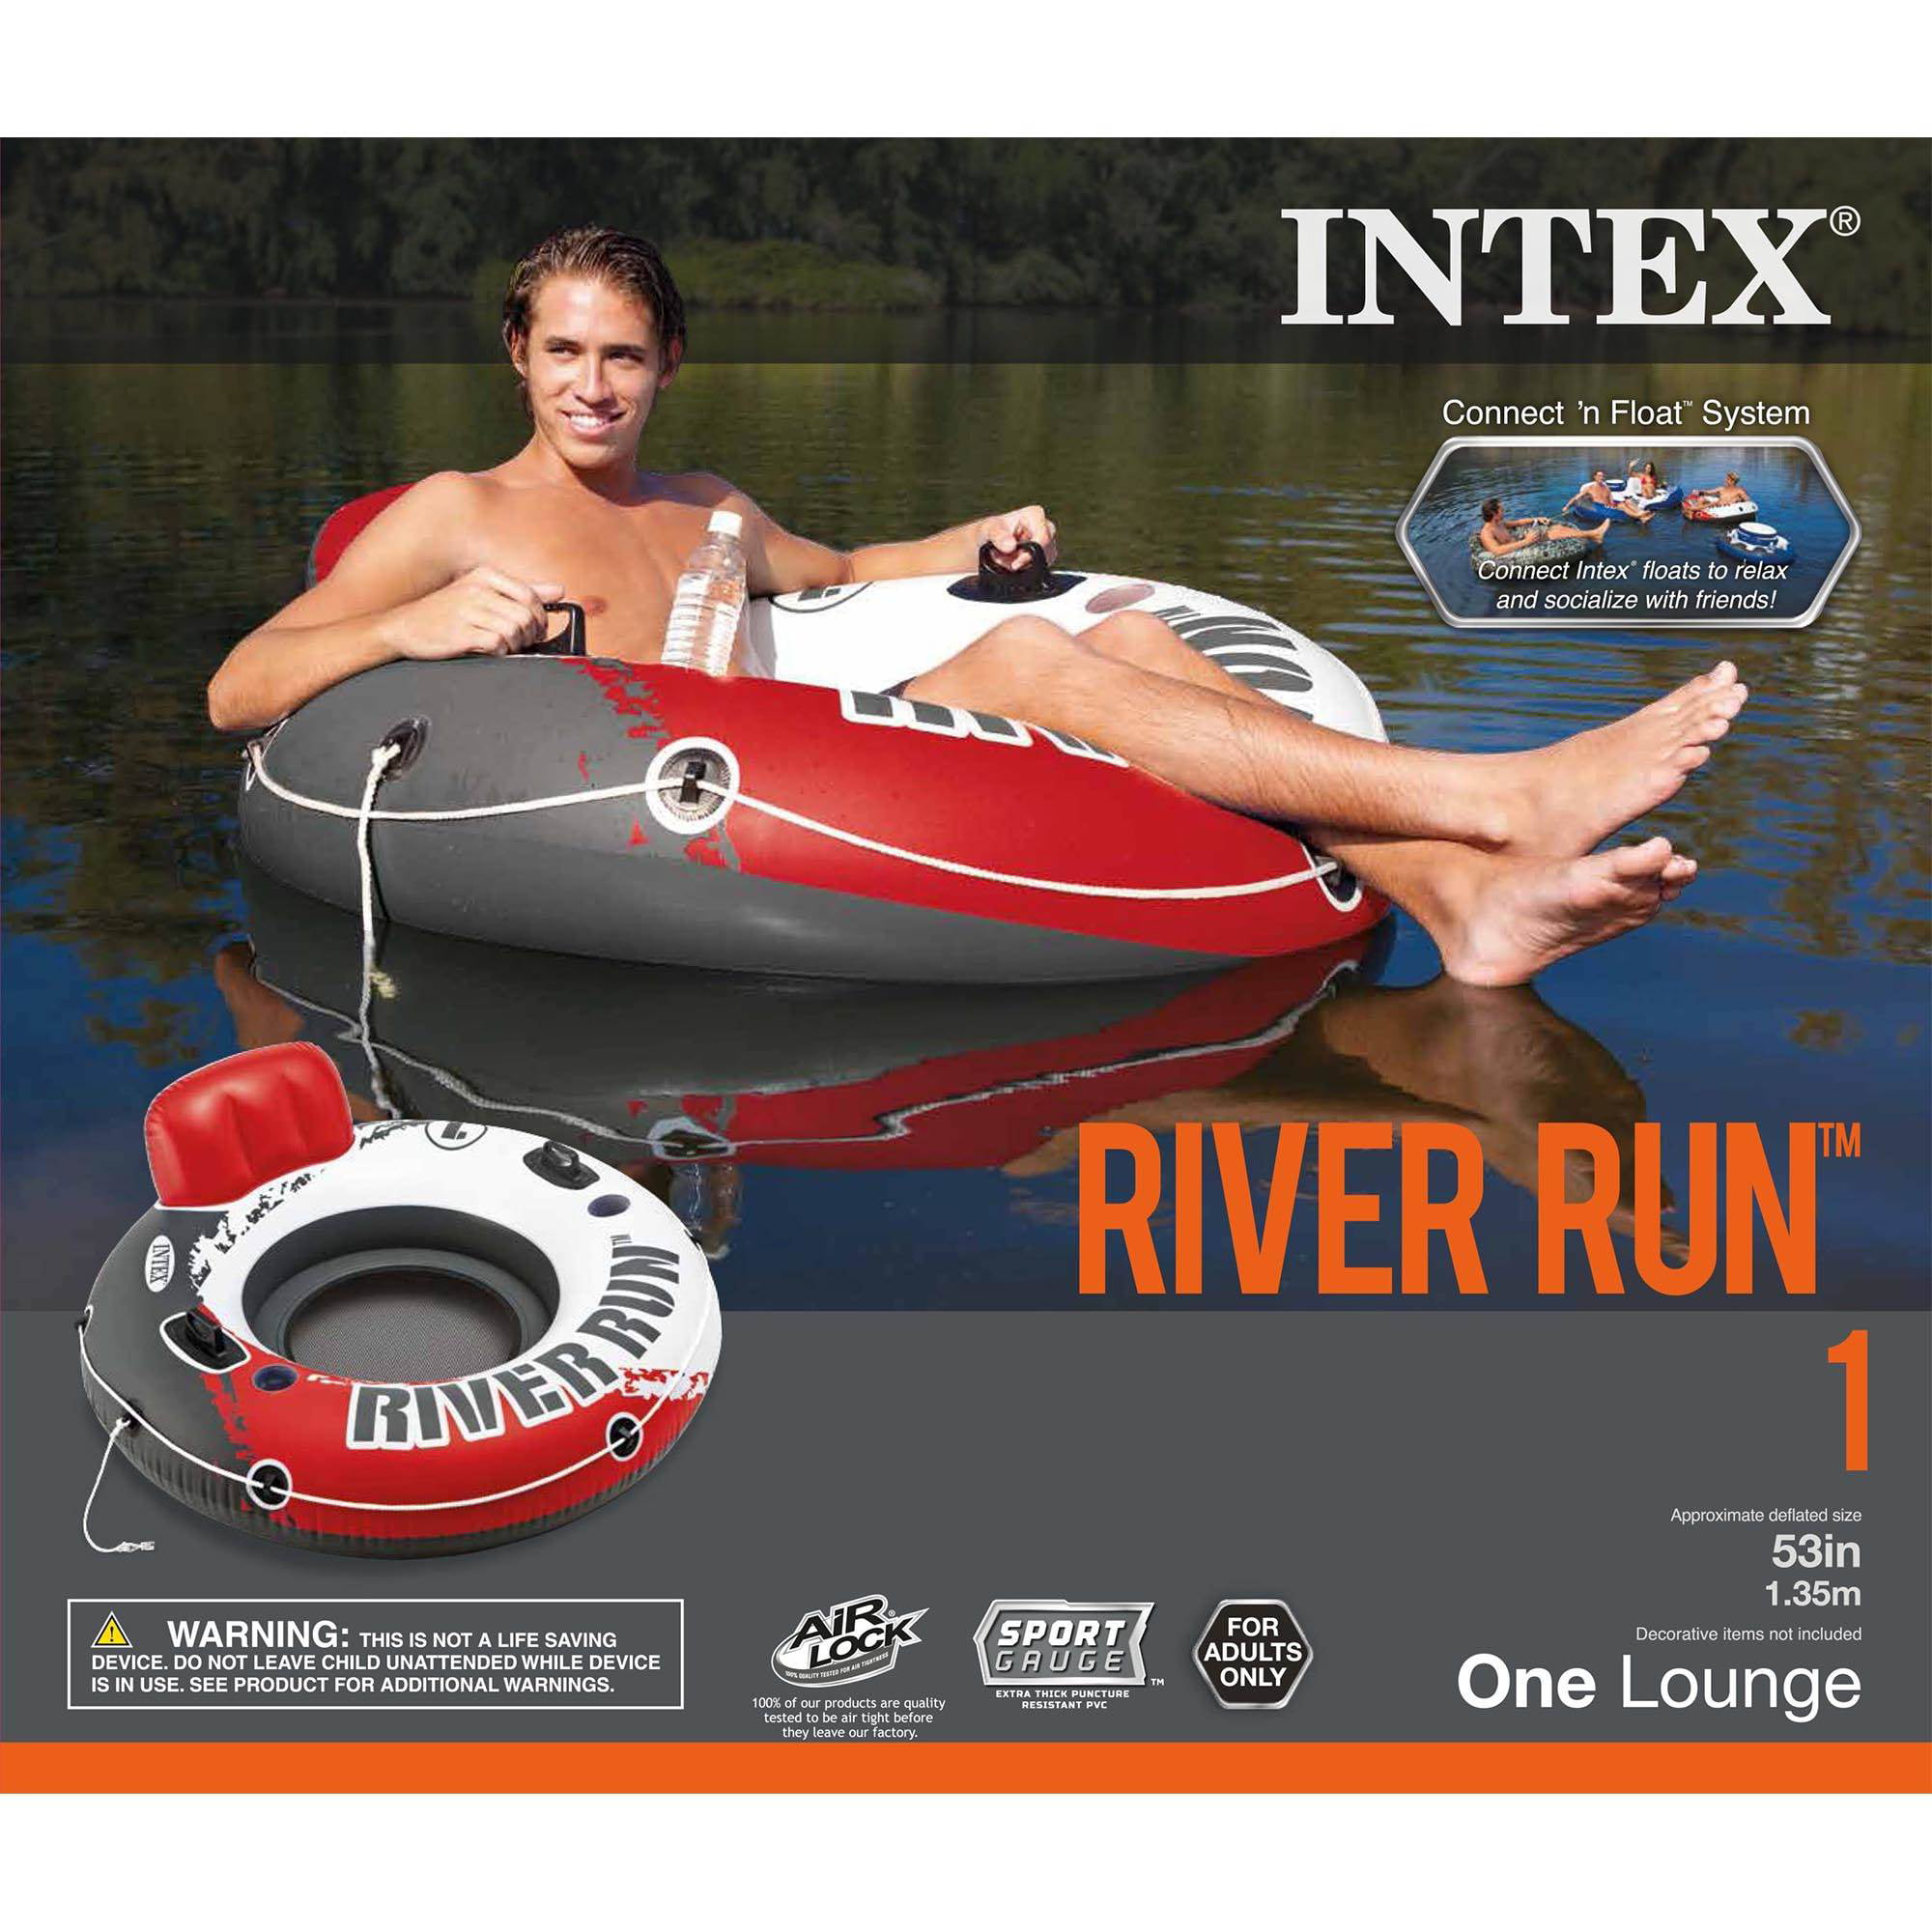 & Mega Chill Beverage Cooler 6 Pack Intex River Run Inflatable Raft 6 Pack 